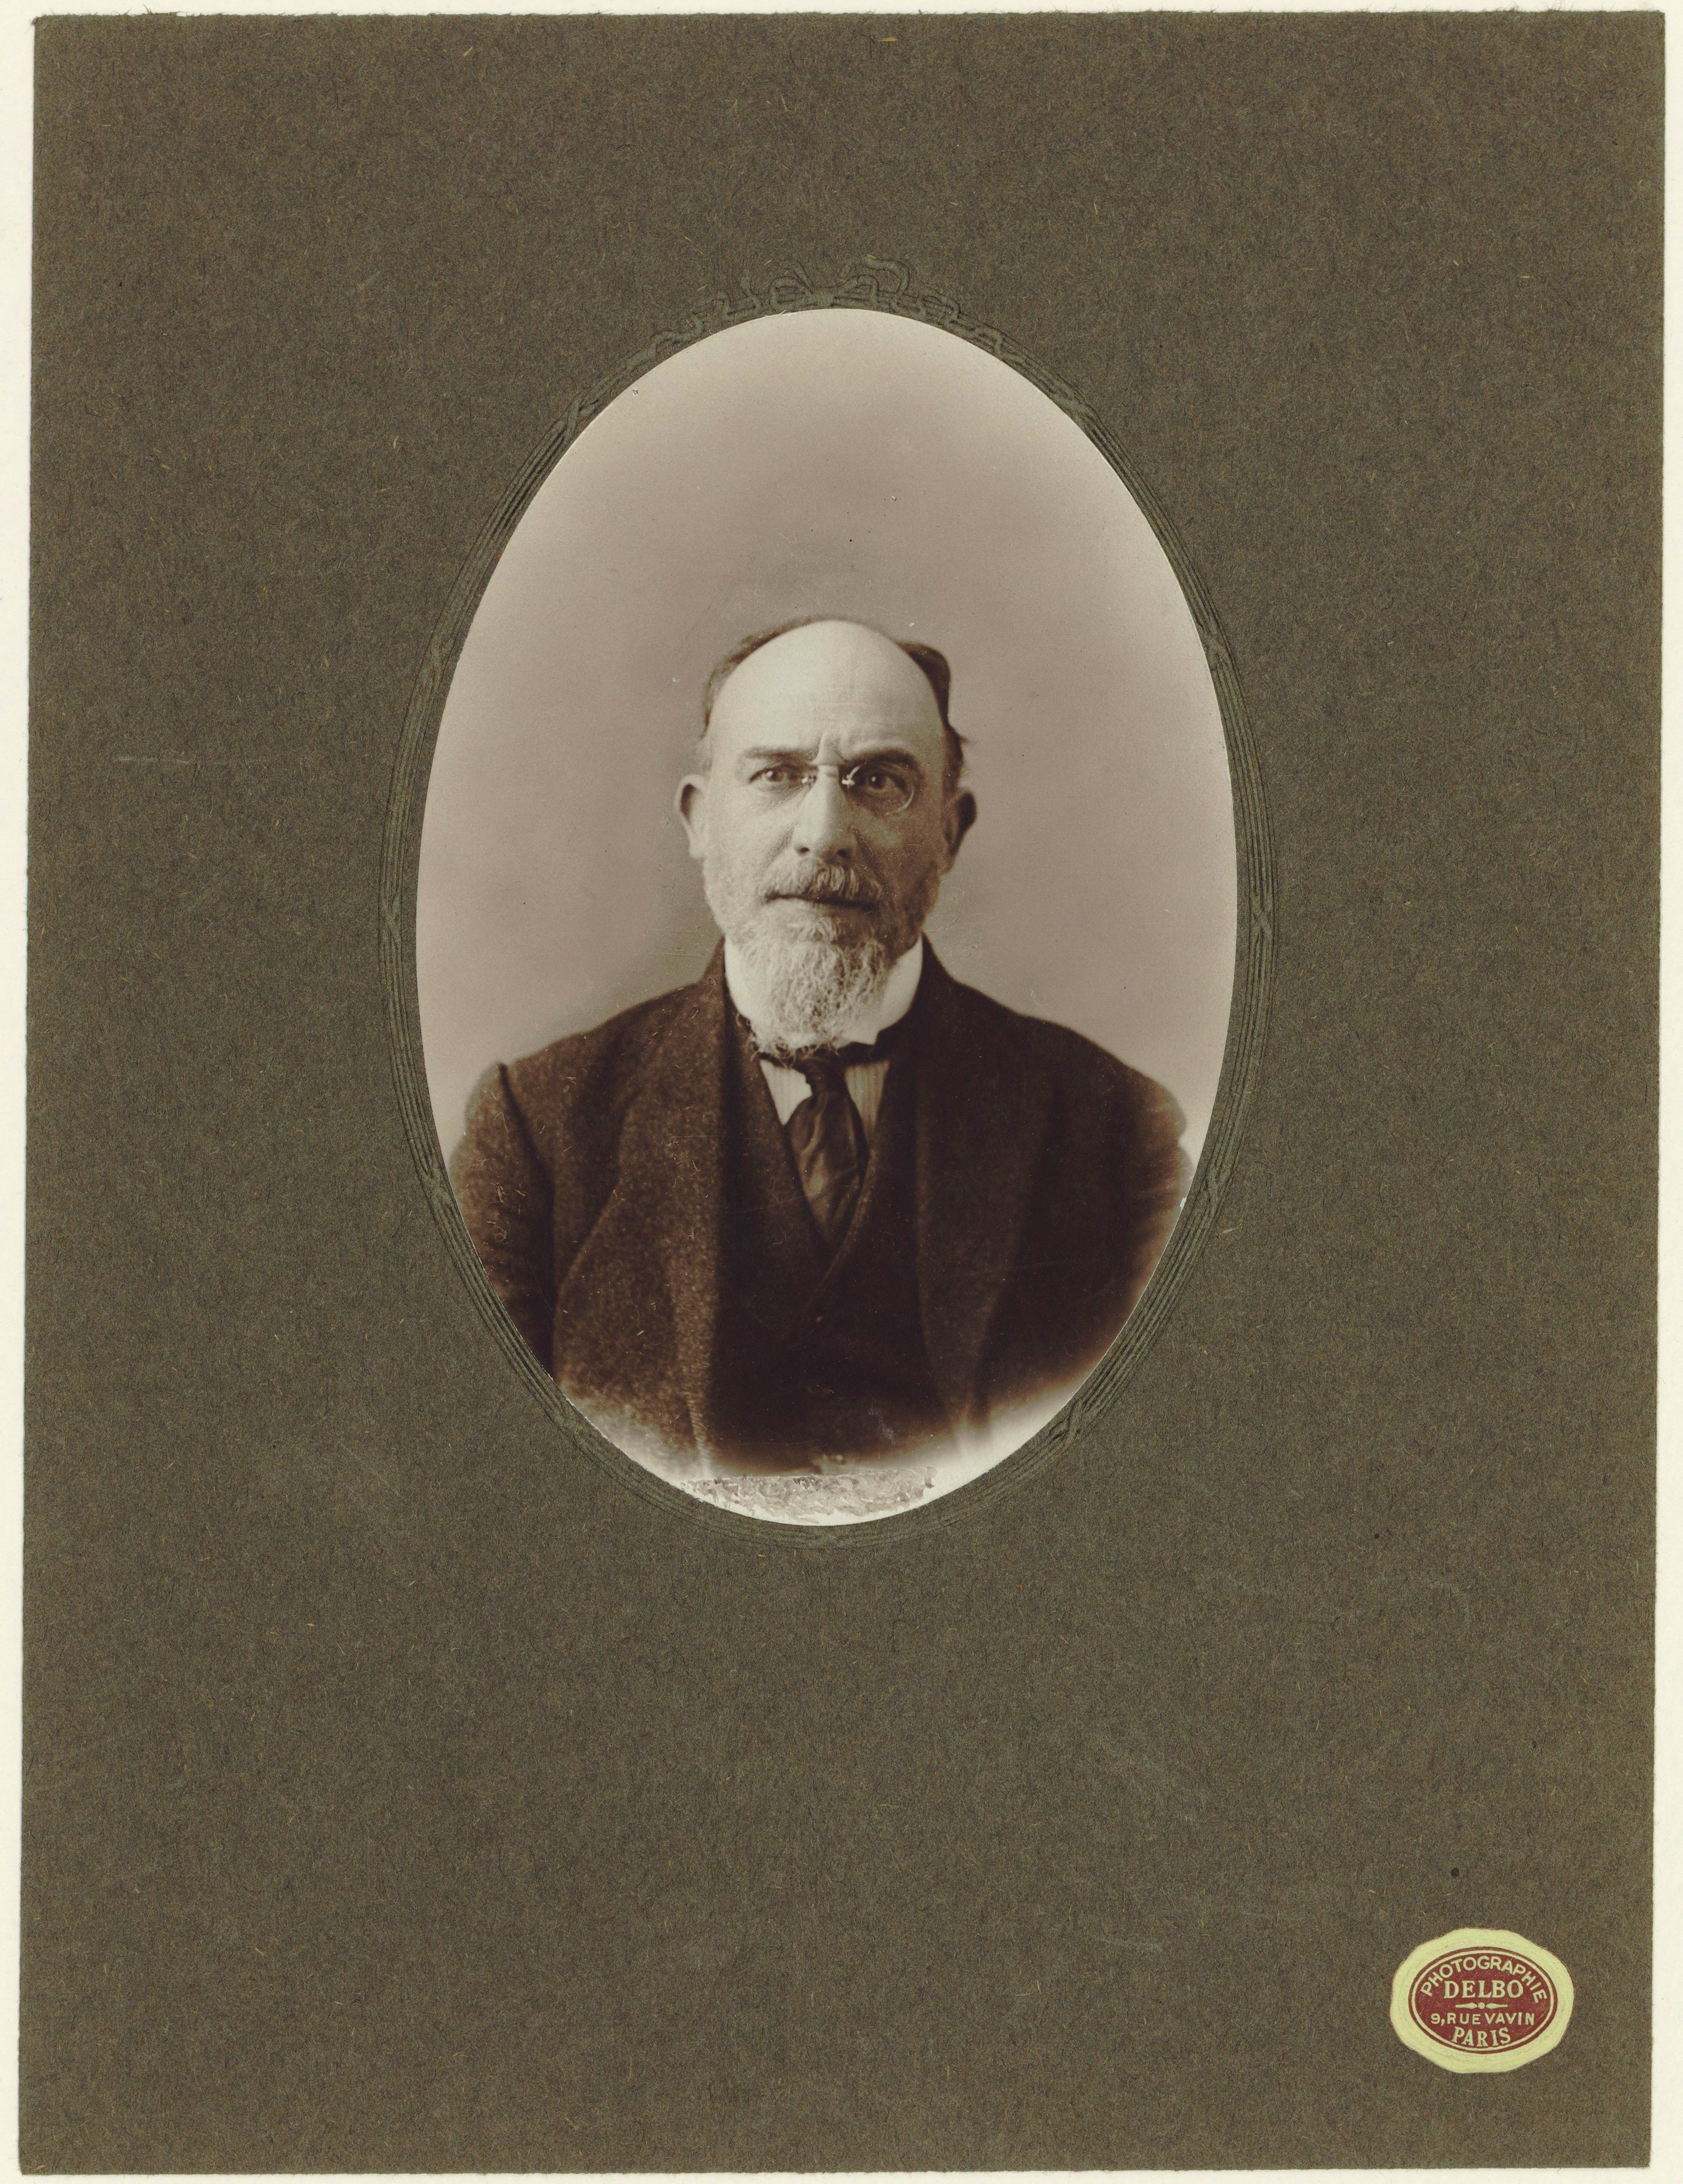 A picture of Erik Satie